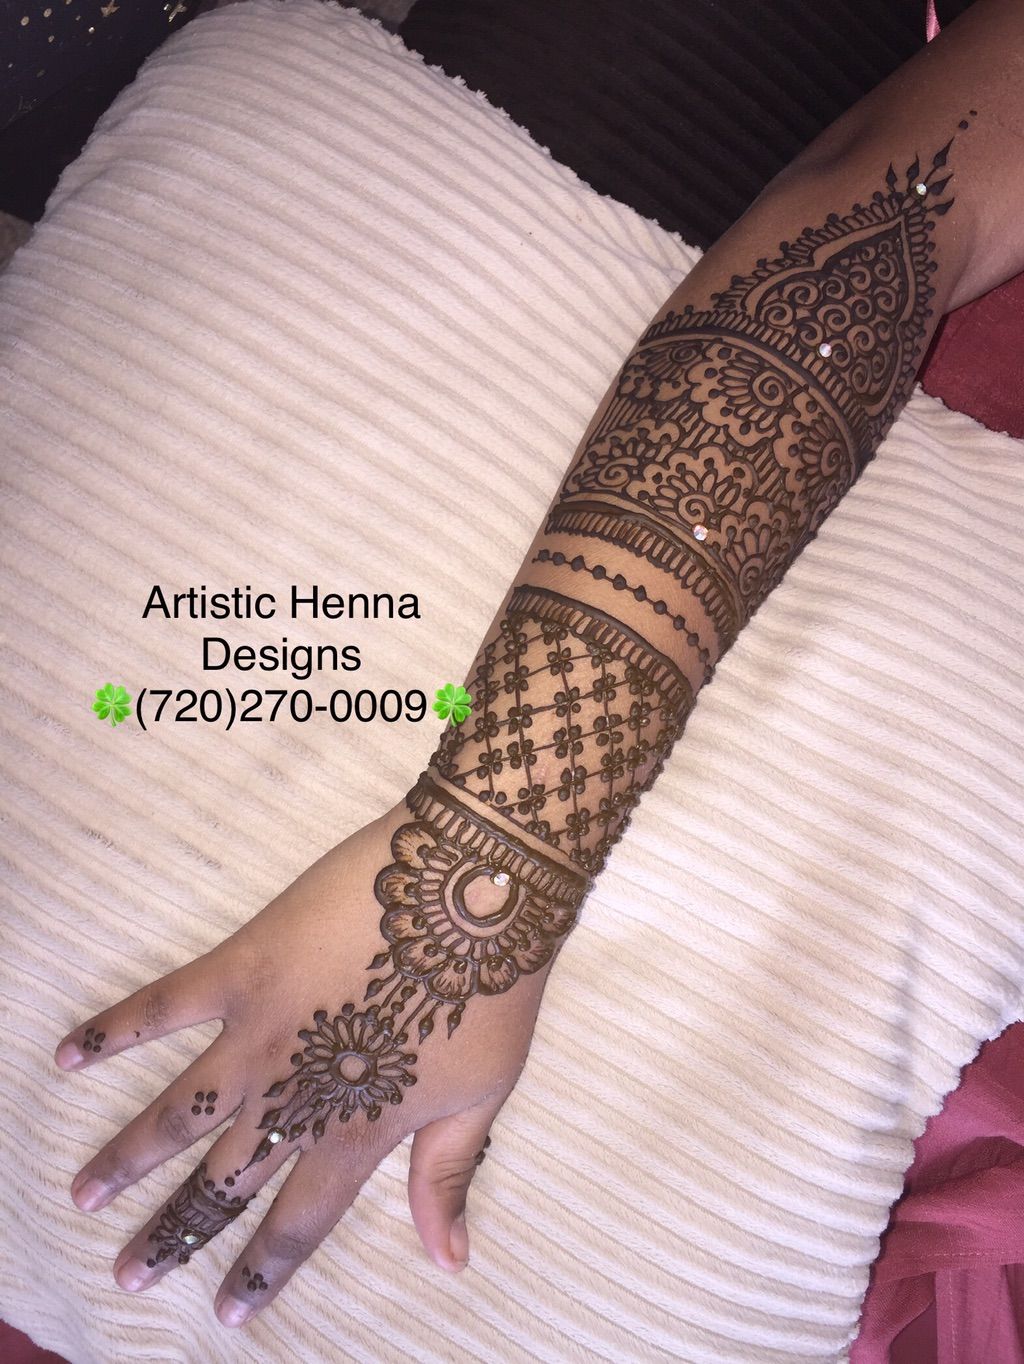 Artistic Henna Designs